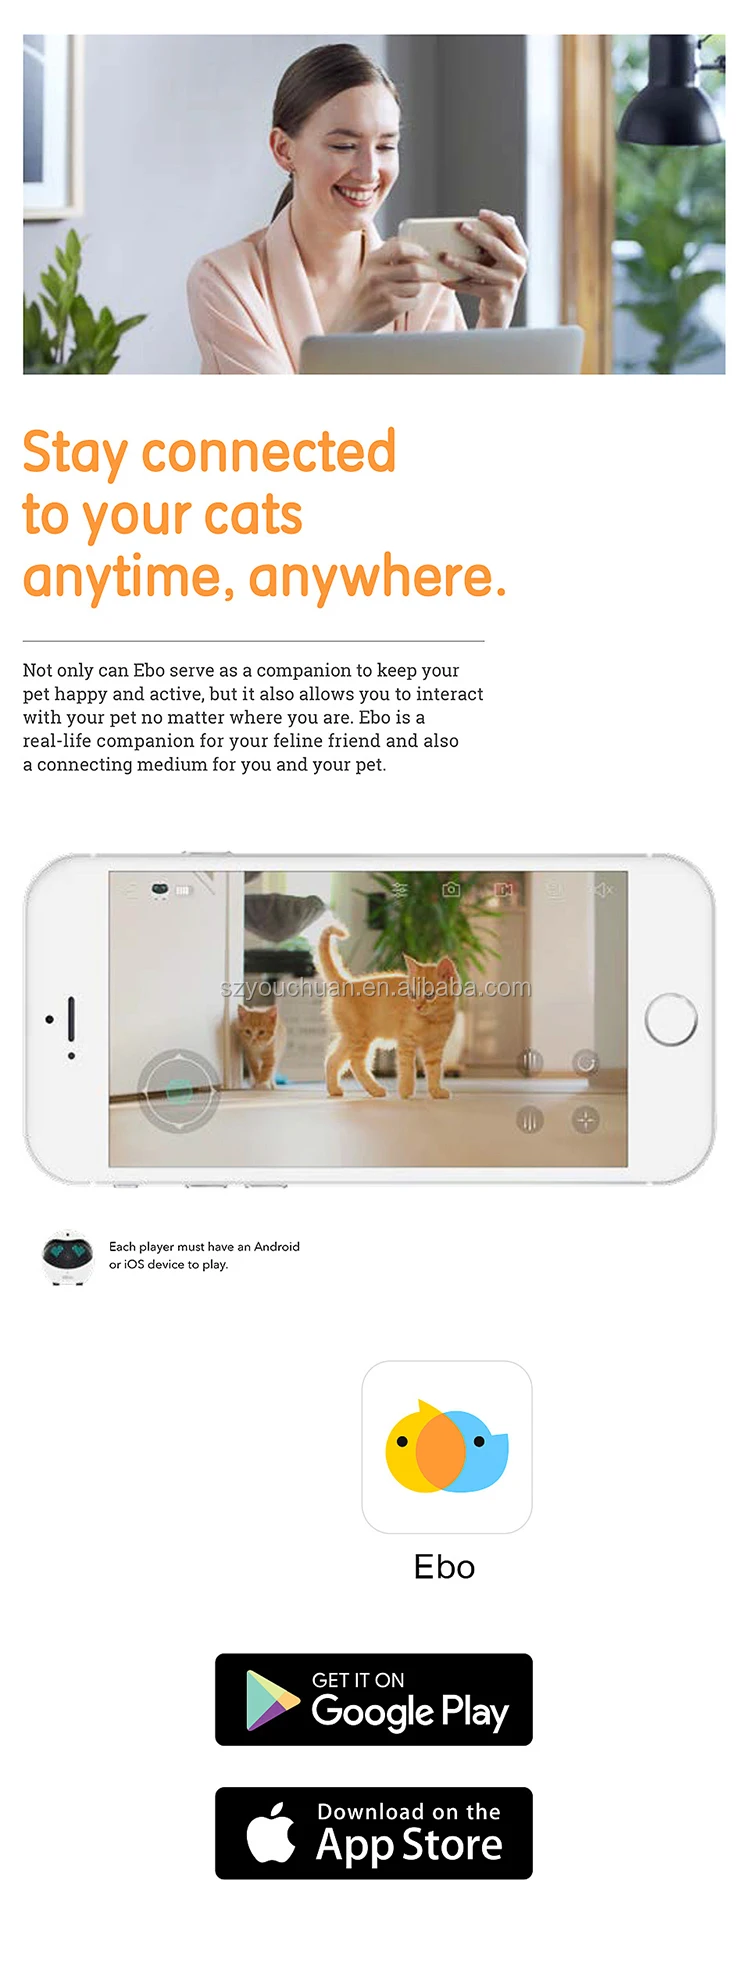 Ebo Smart Robot WiFi Collar Catpal Pet Cats Toys 1080P HD Video Security Camera 